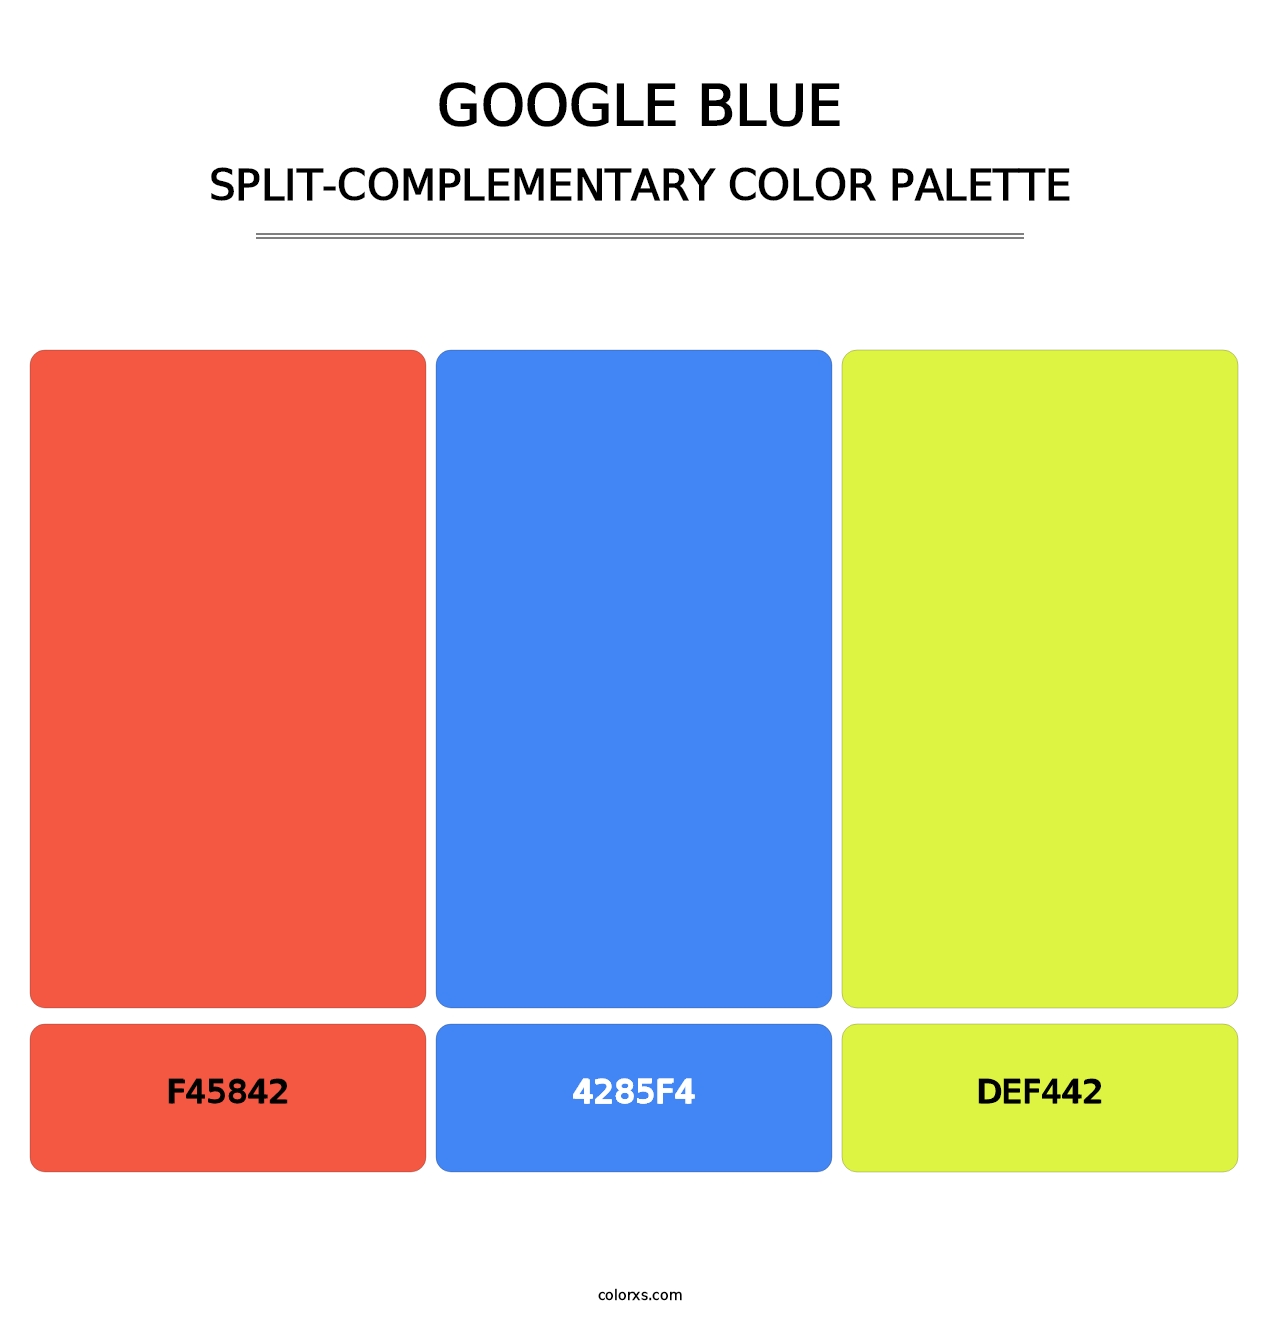 Google Blue - Split-Complementary Color Palette